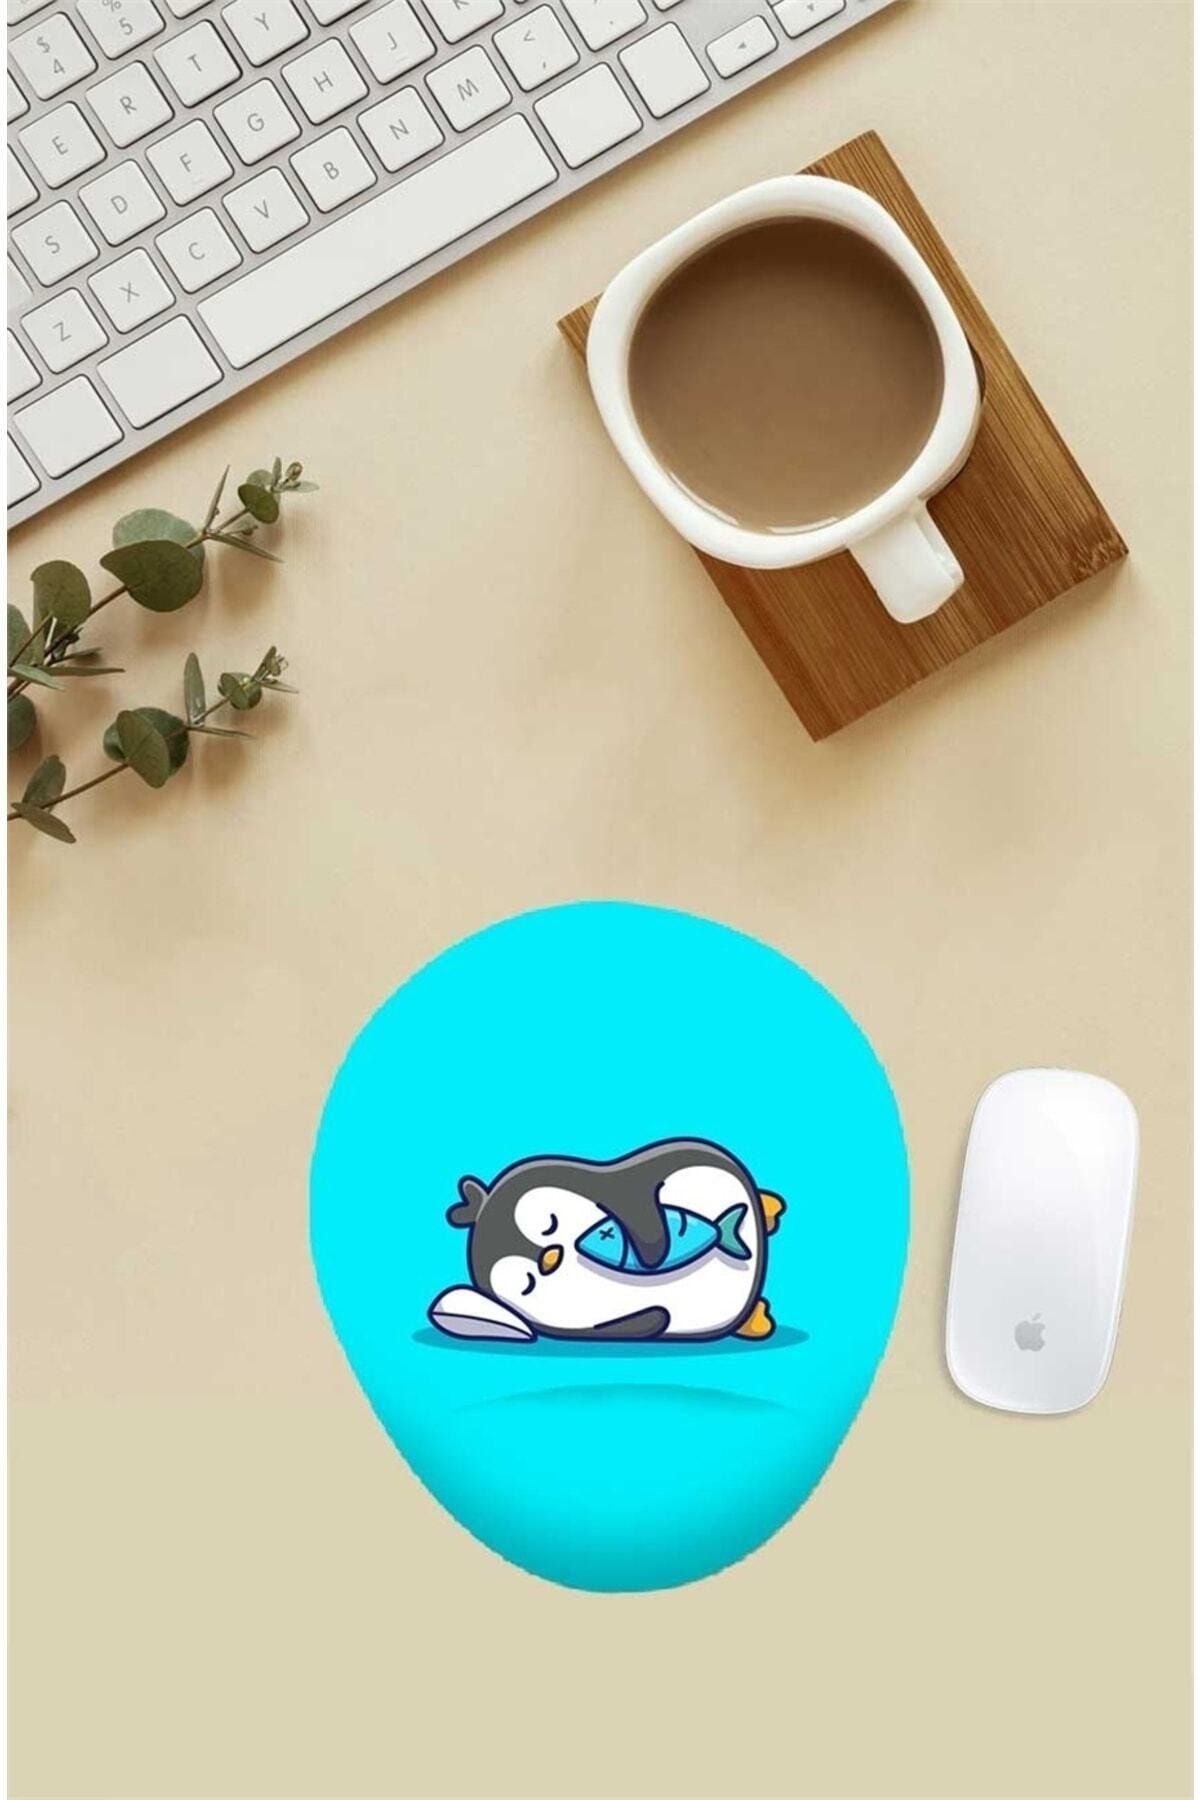 HobiShop Tembel Penguen Desenli Bilek Destekli Mouse Pad